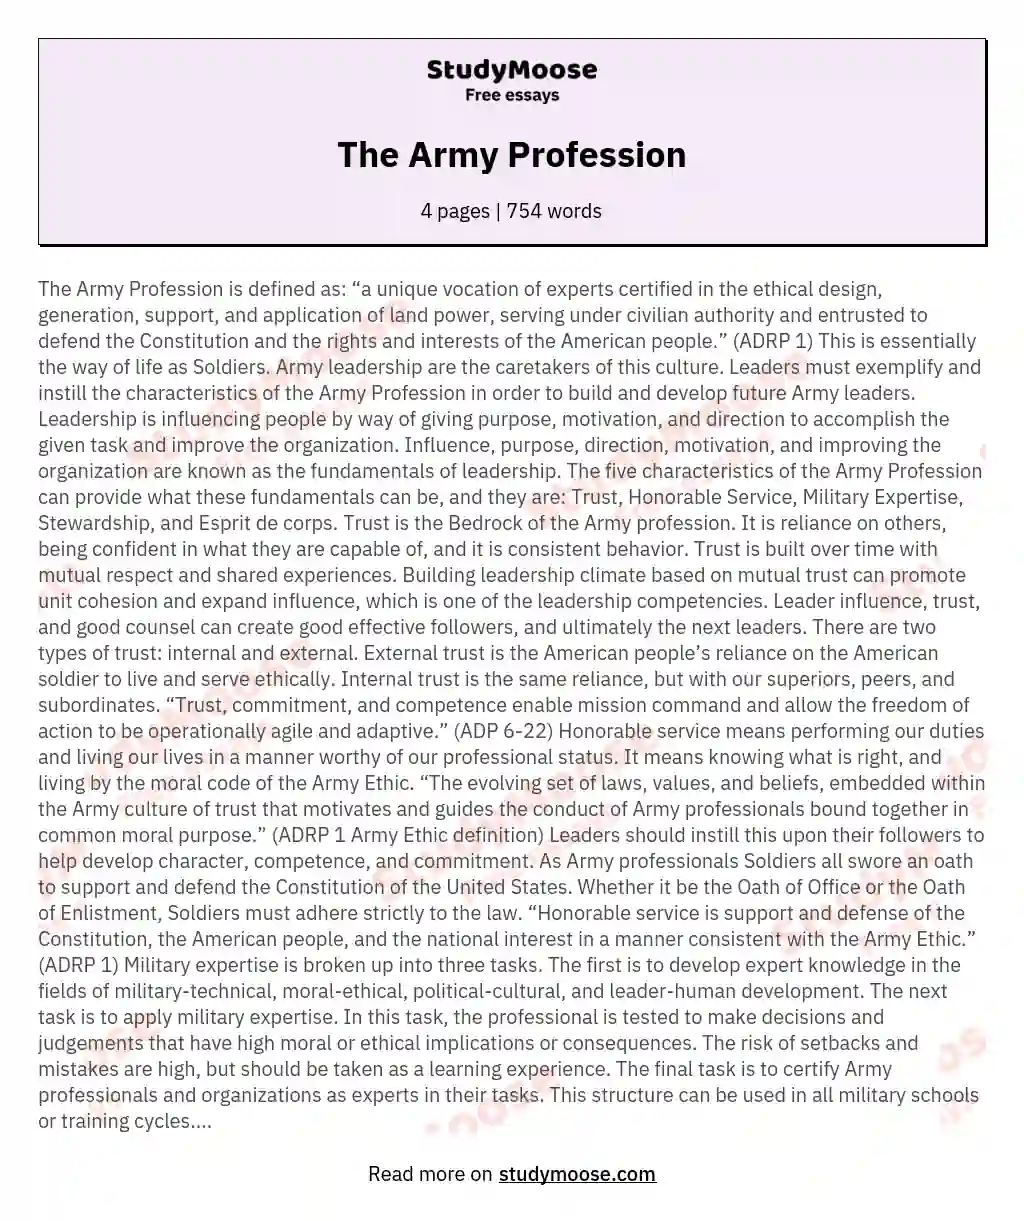 The Army Profession essay